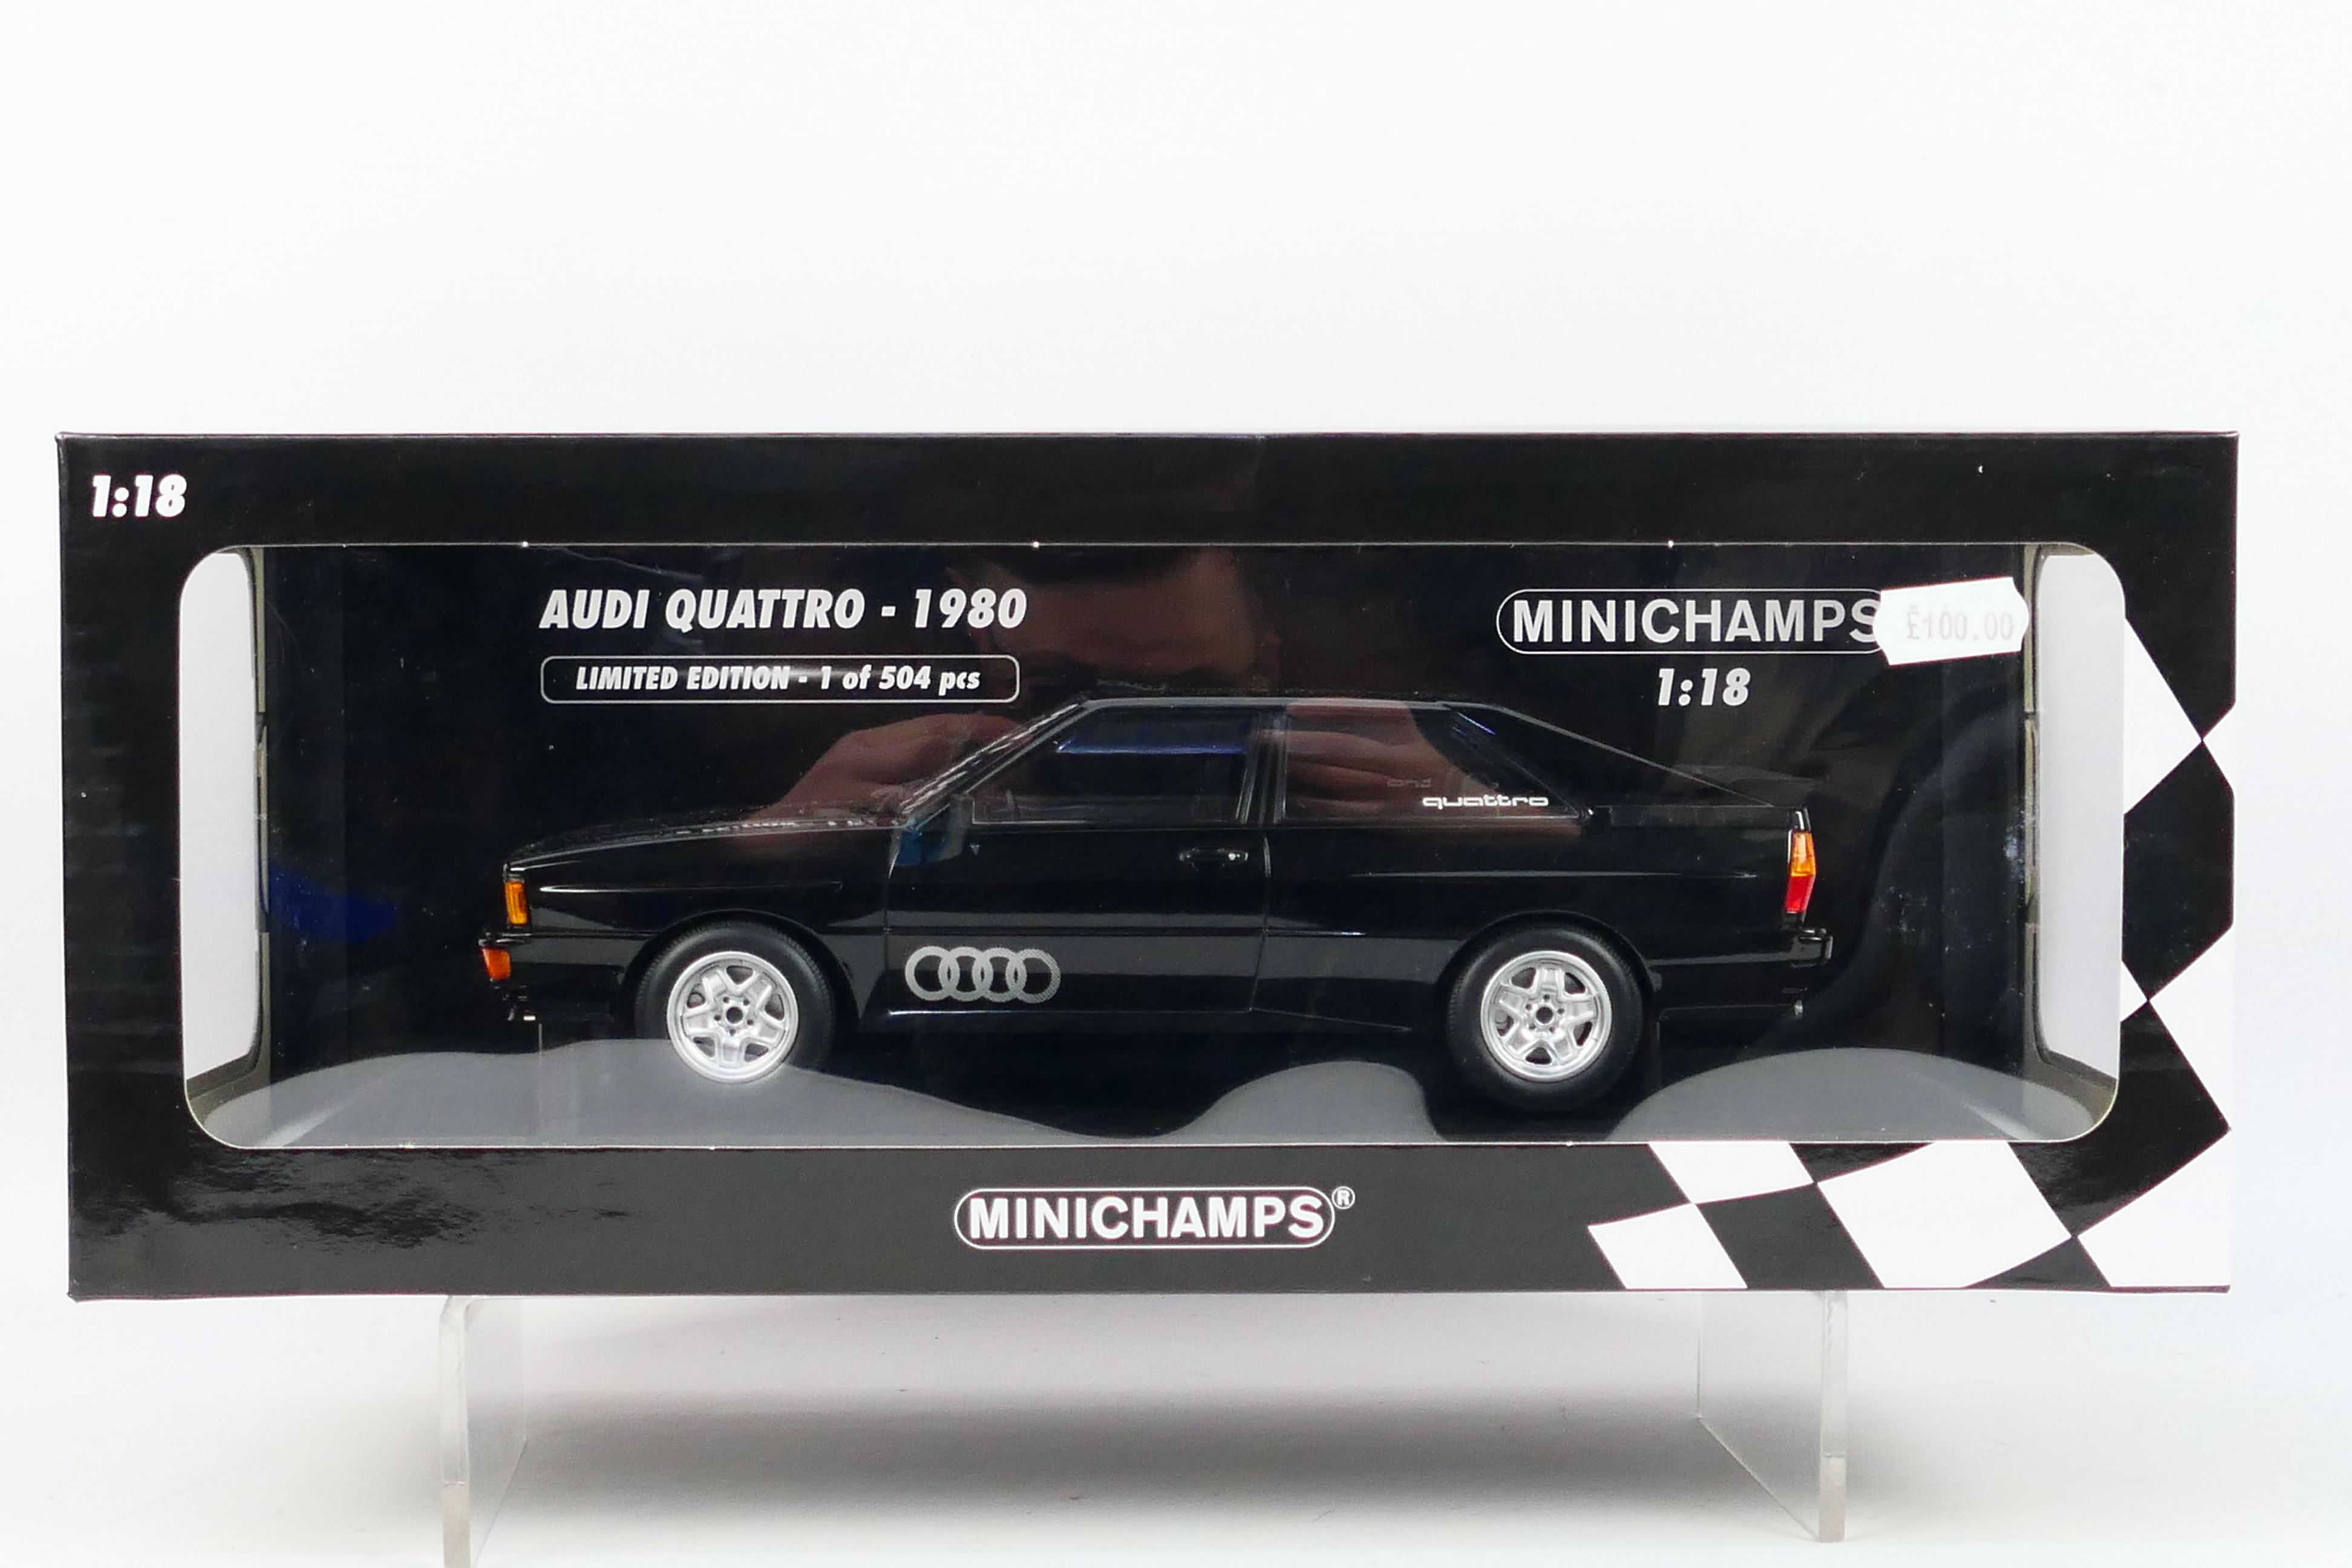 Minichamps - A boxed 1:18 scale Minichamps Limited Edition #155016121 1980 Audi Quattro.